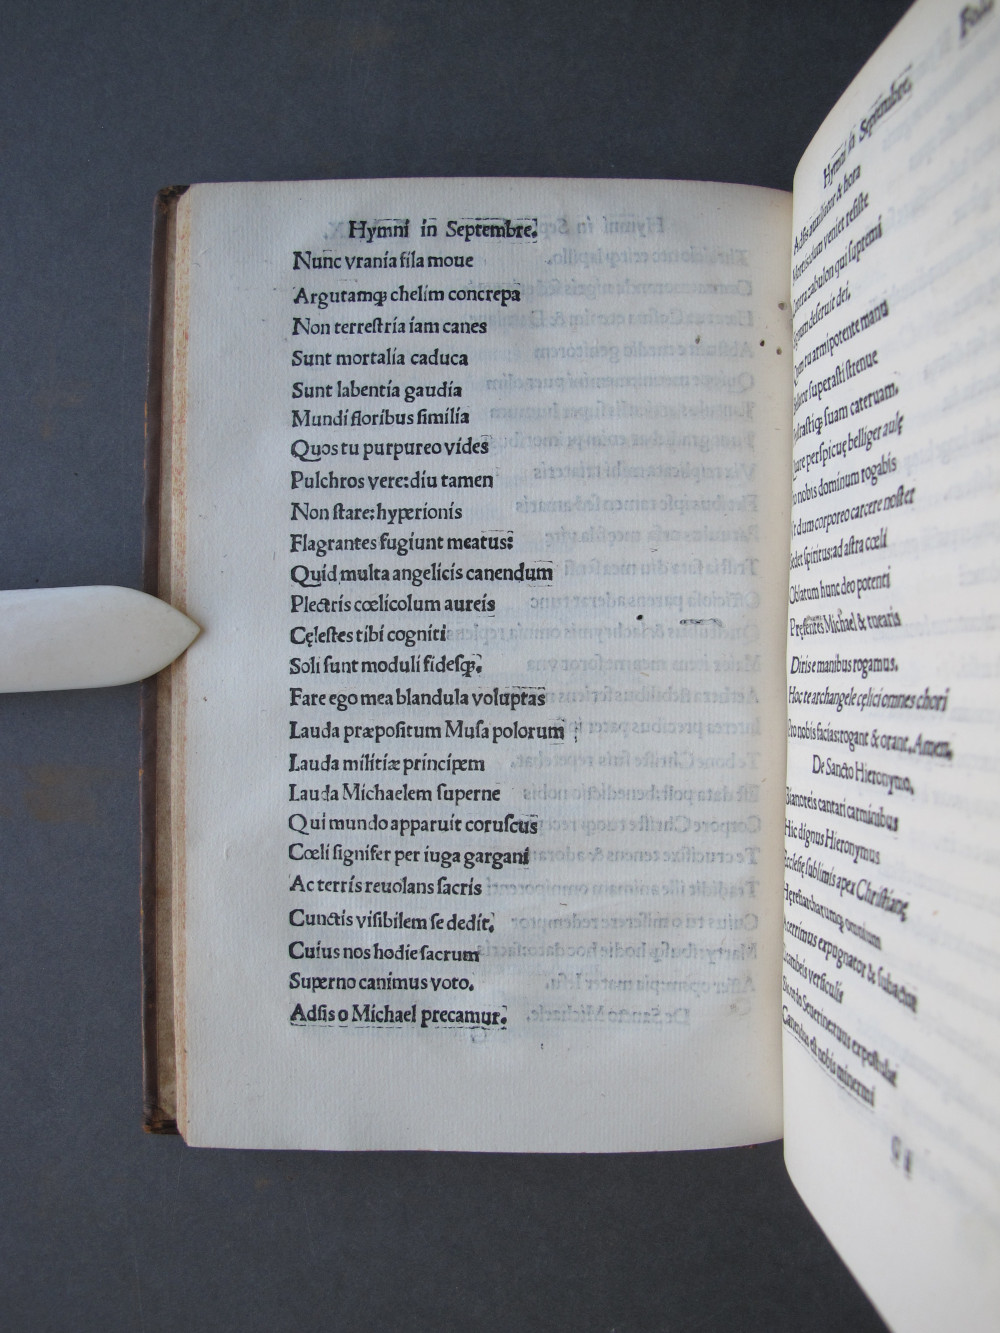 Folio 49 verso